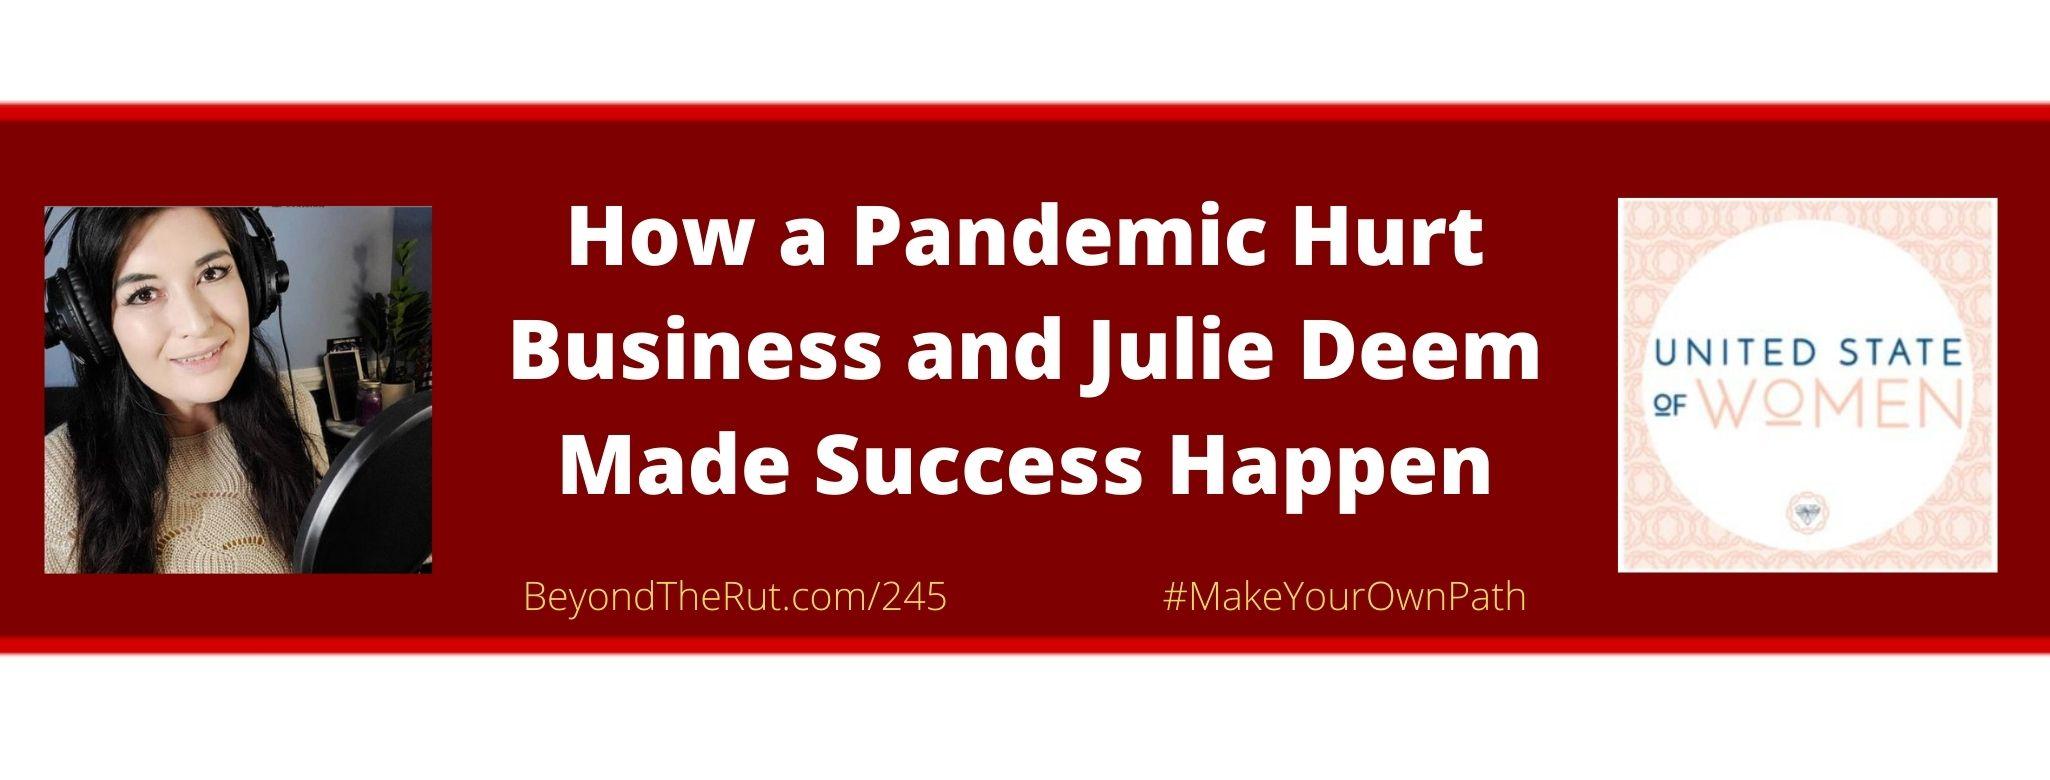 pandemic hurt business